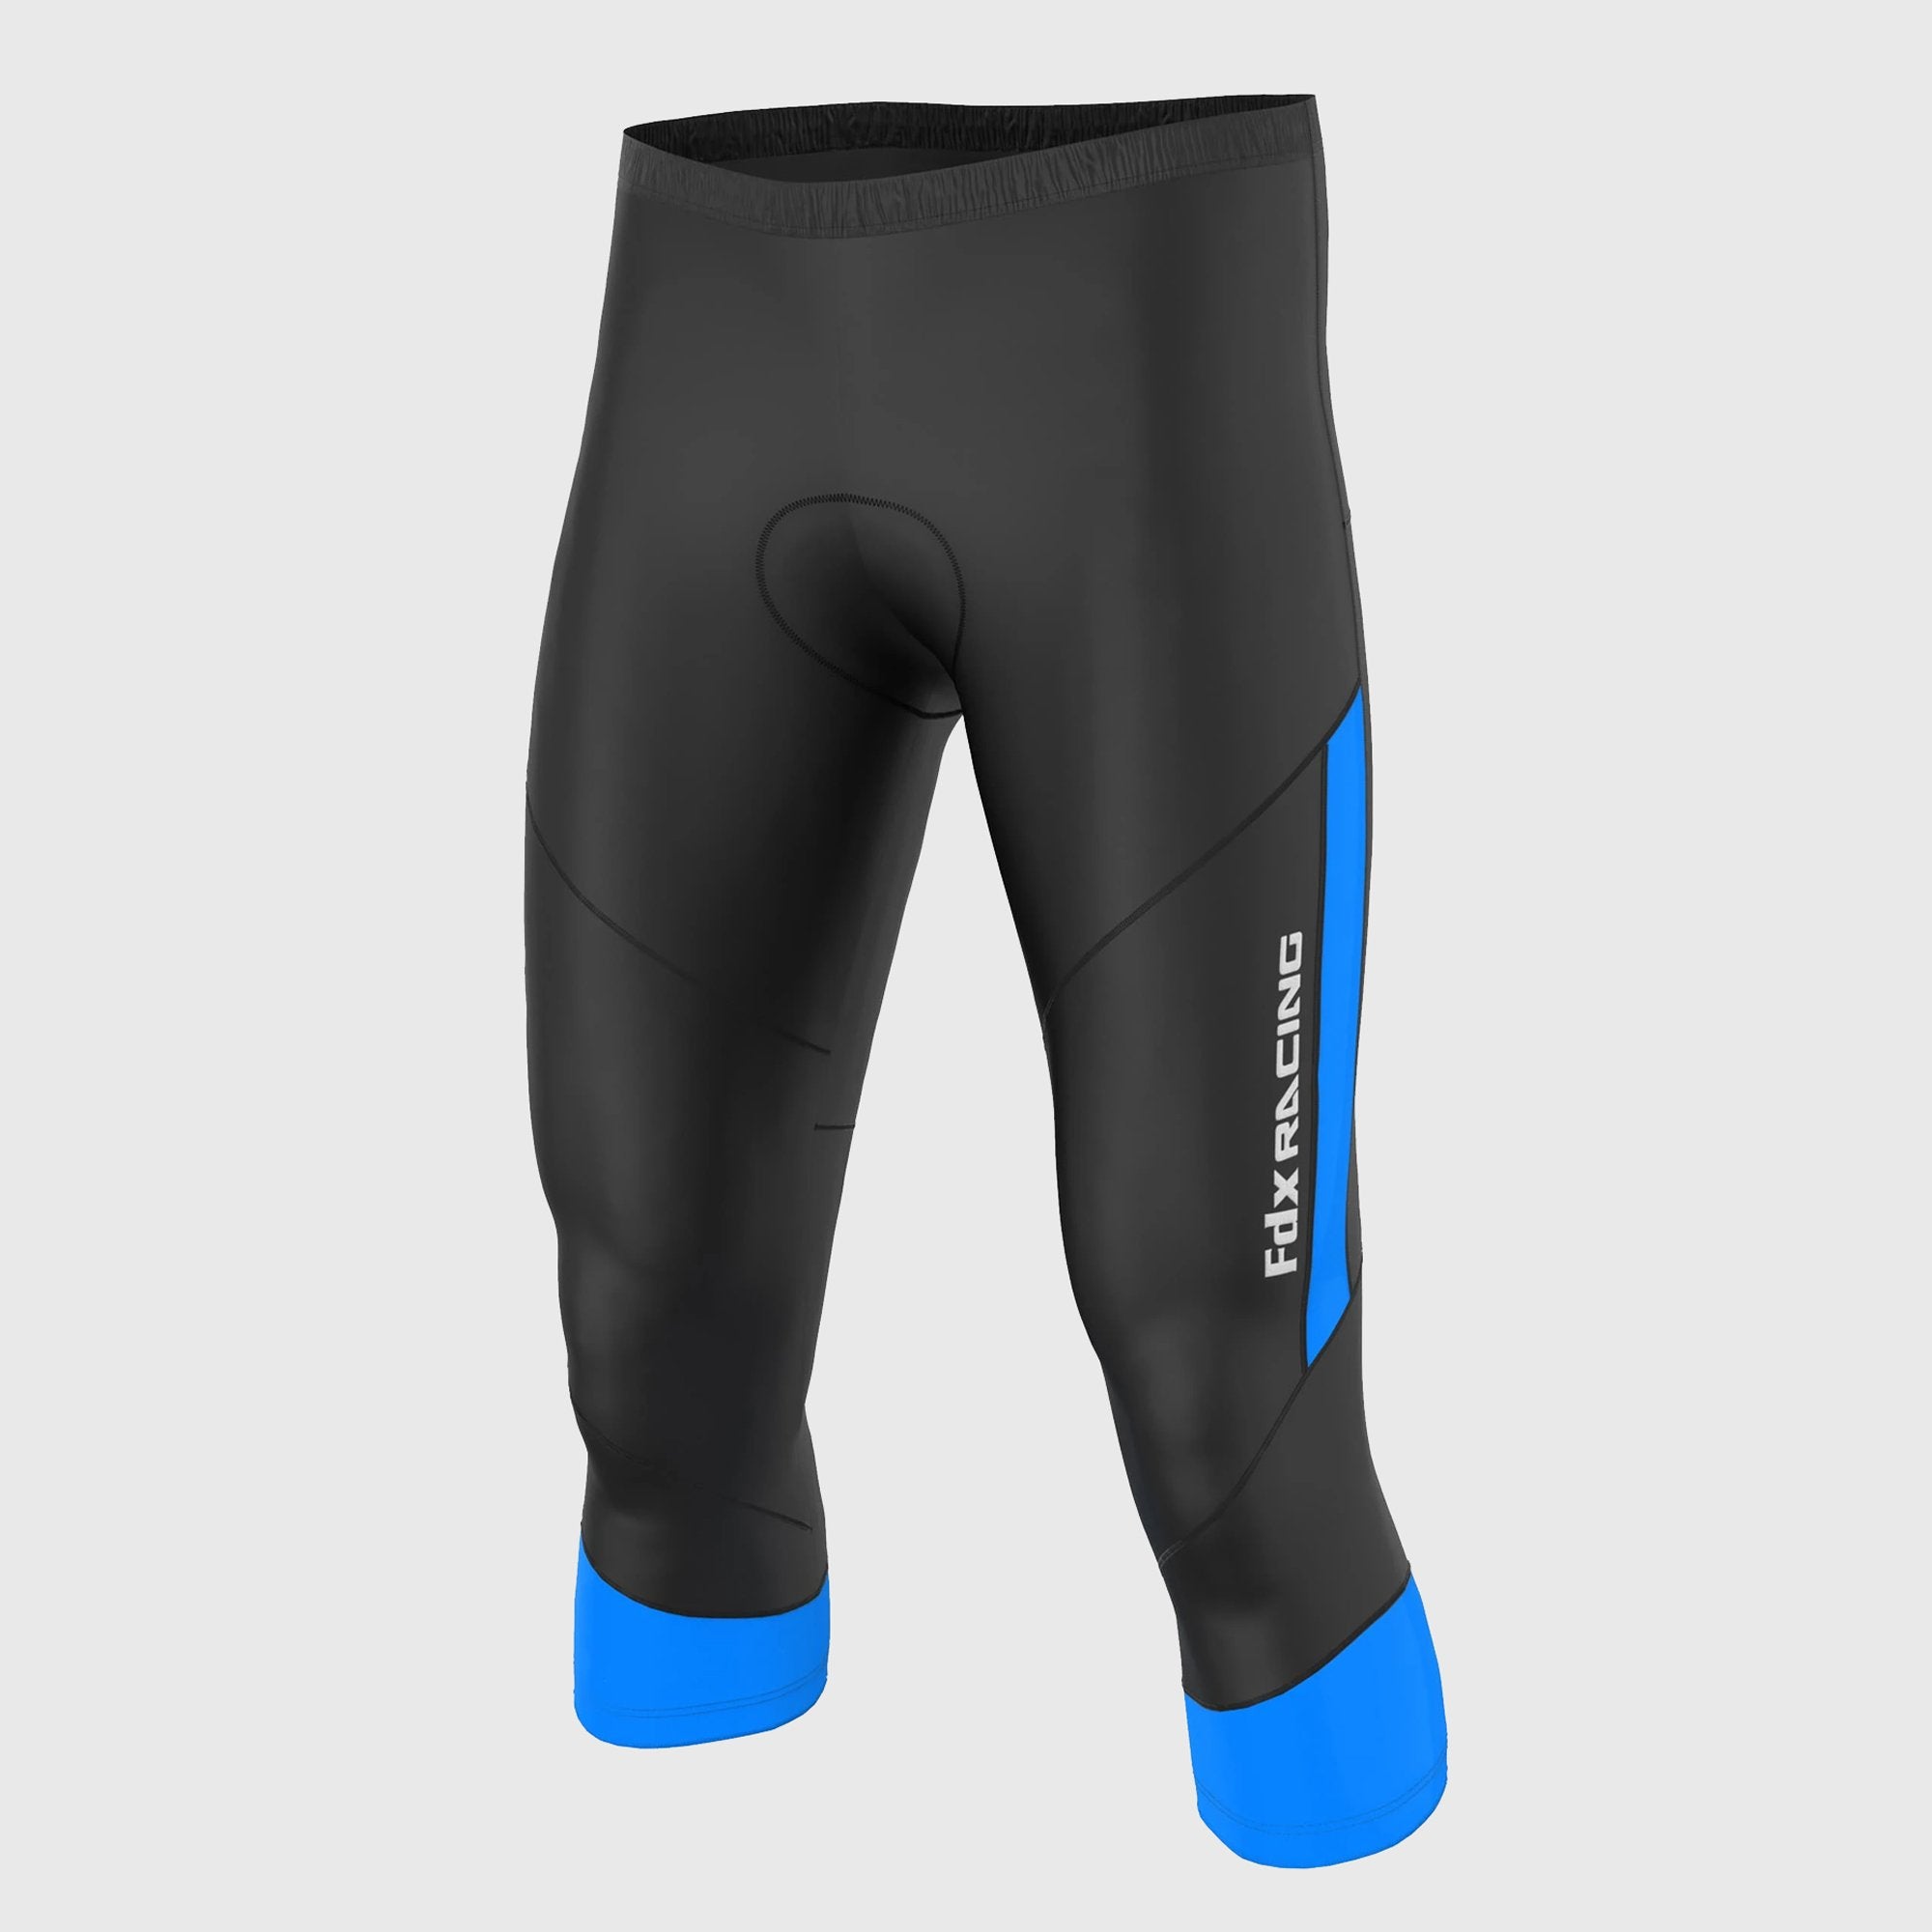 Men's Cycling Padded Coolmax® Shorts Bycycle Leggings Pants Top